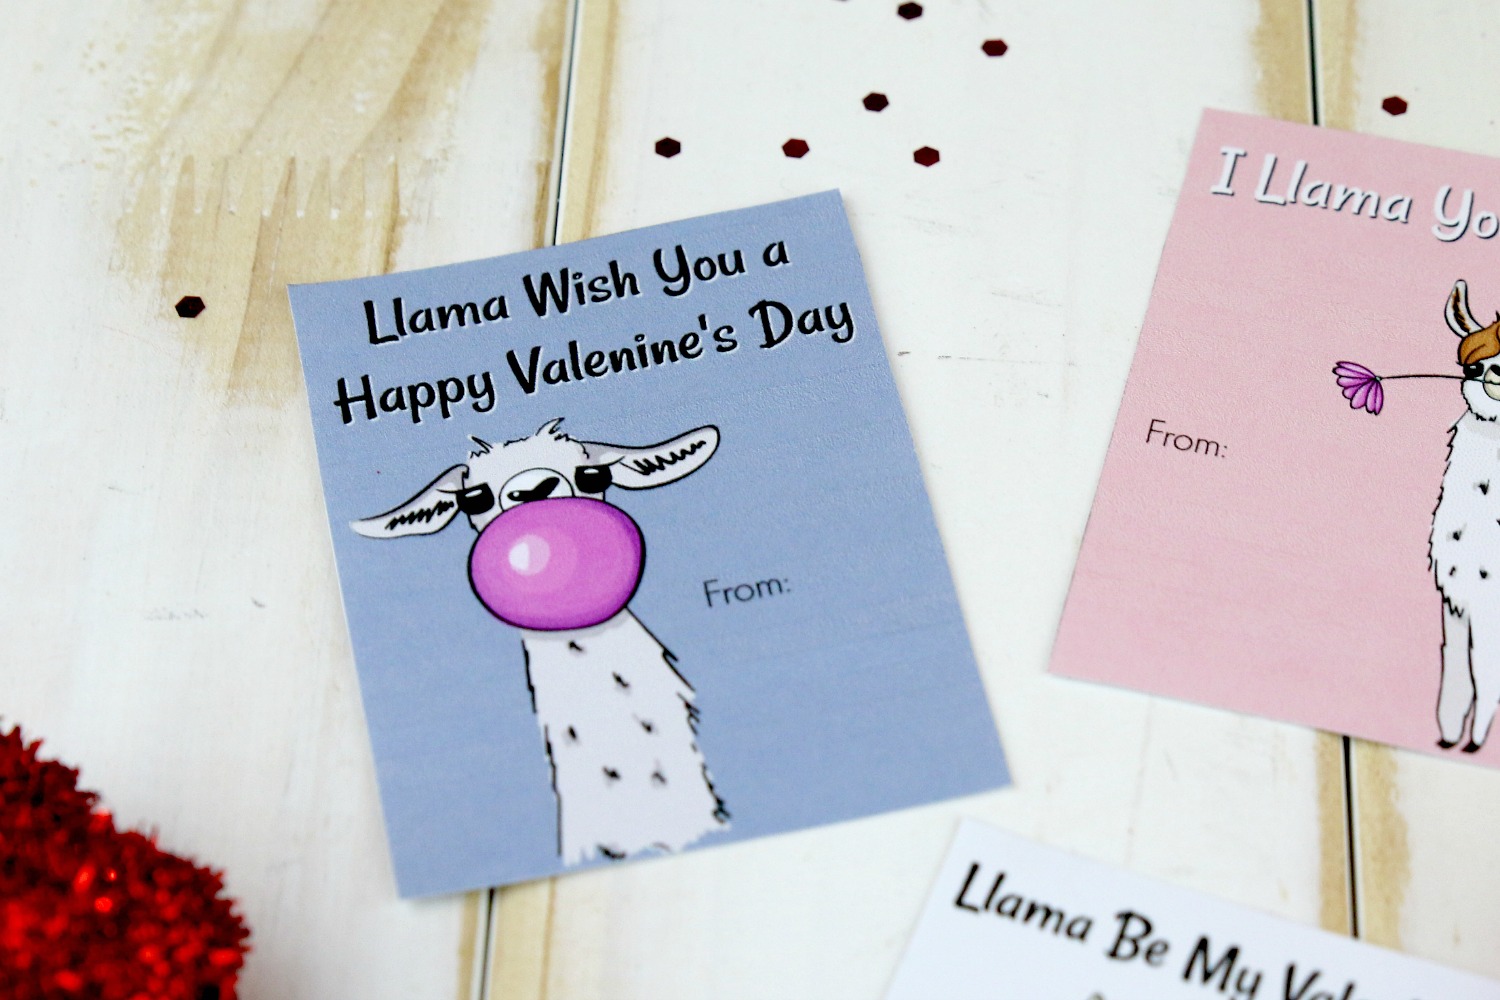 Llama wish you happy Valentine's Day